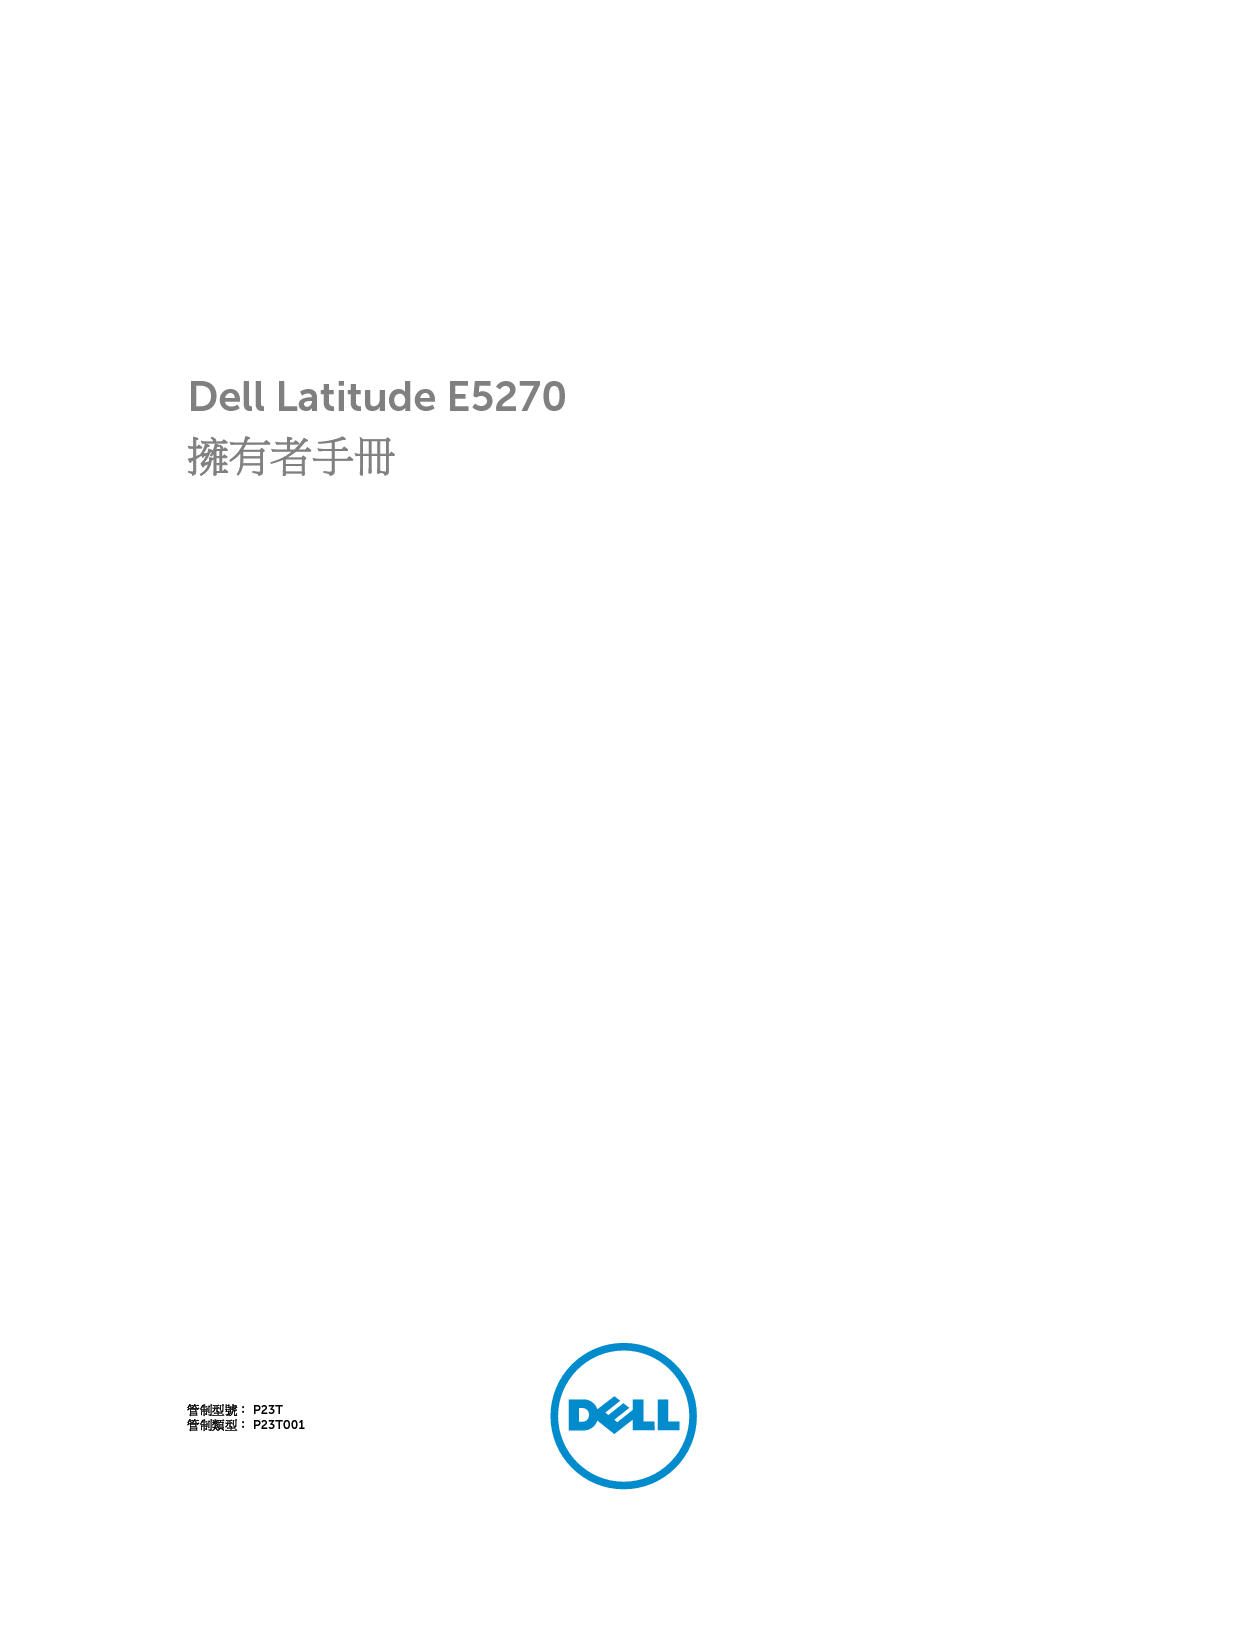 戴尔 Dell Latitude E5270 繁体 用户手册 封面